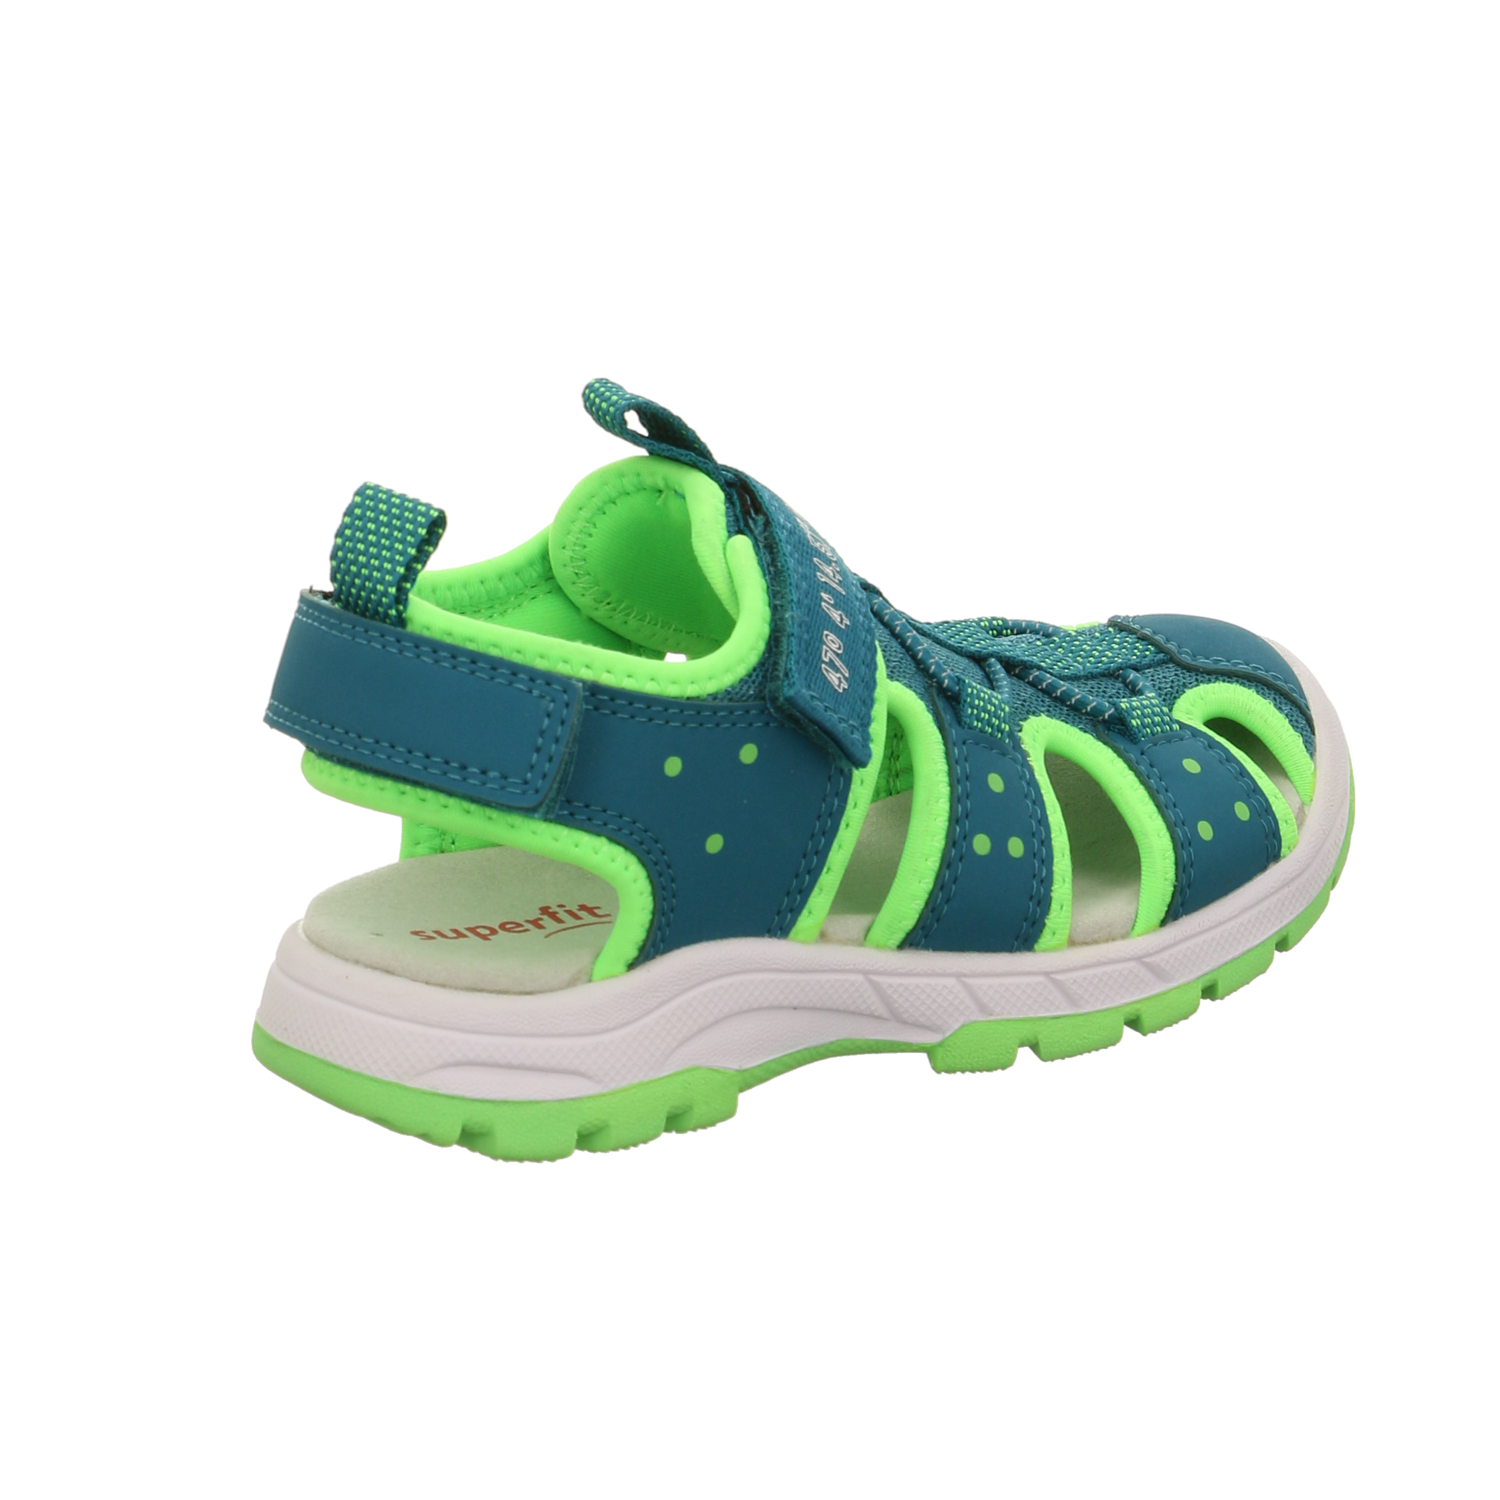 Superfit Sandalette J grün